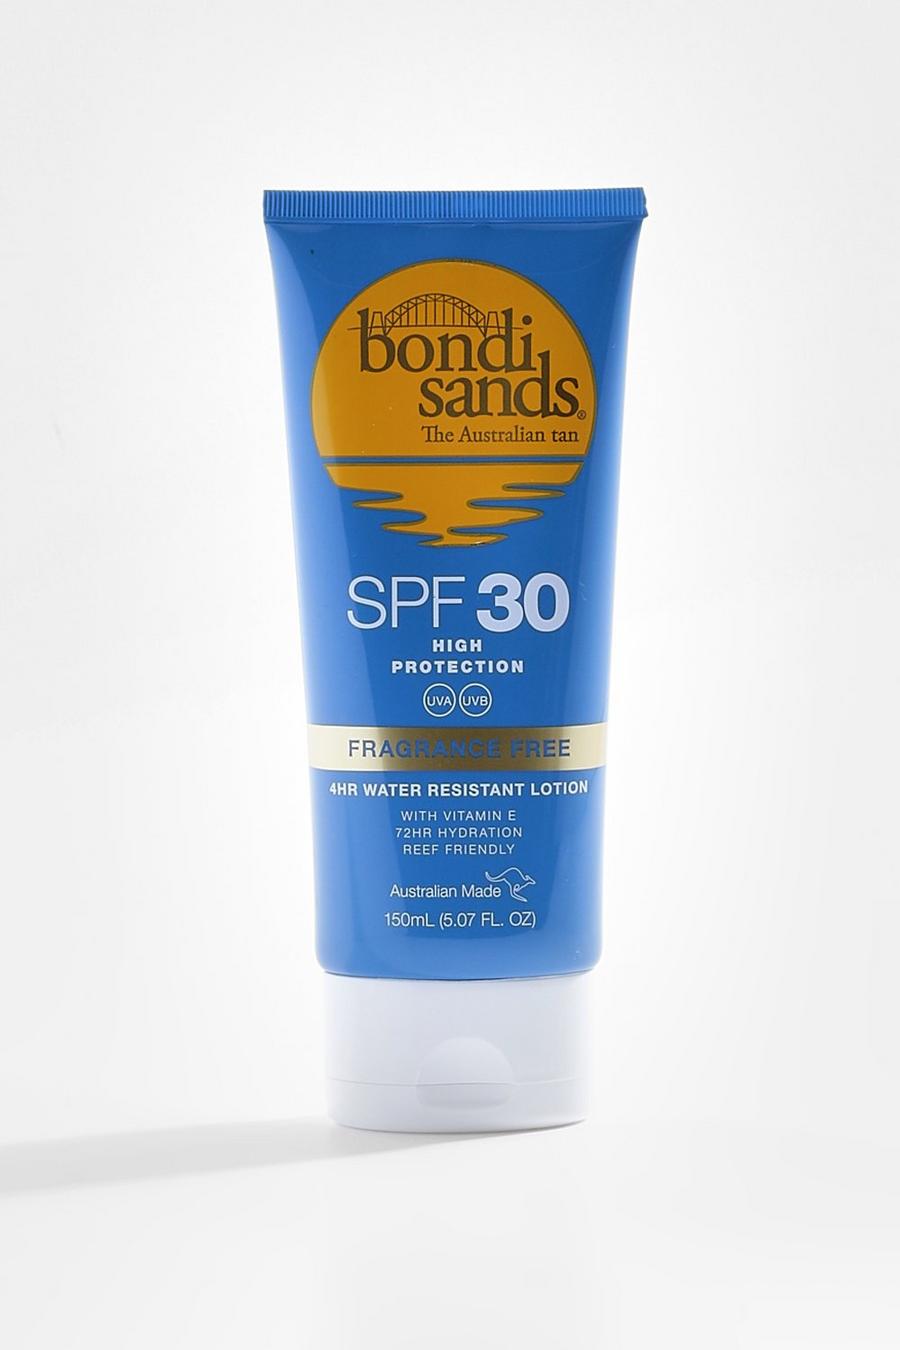 White vit Bondi Sands SPF 30 Lotion Fragrance Free Suncreen Lotion 150ml